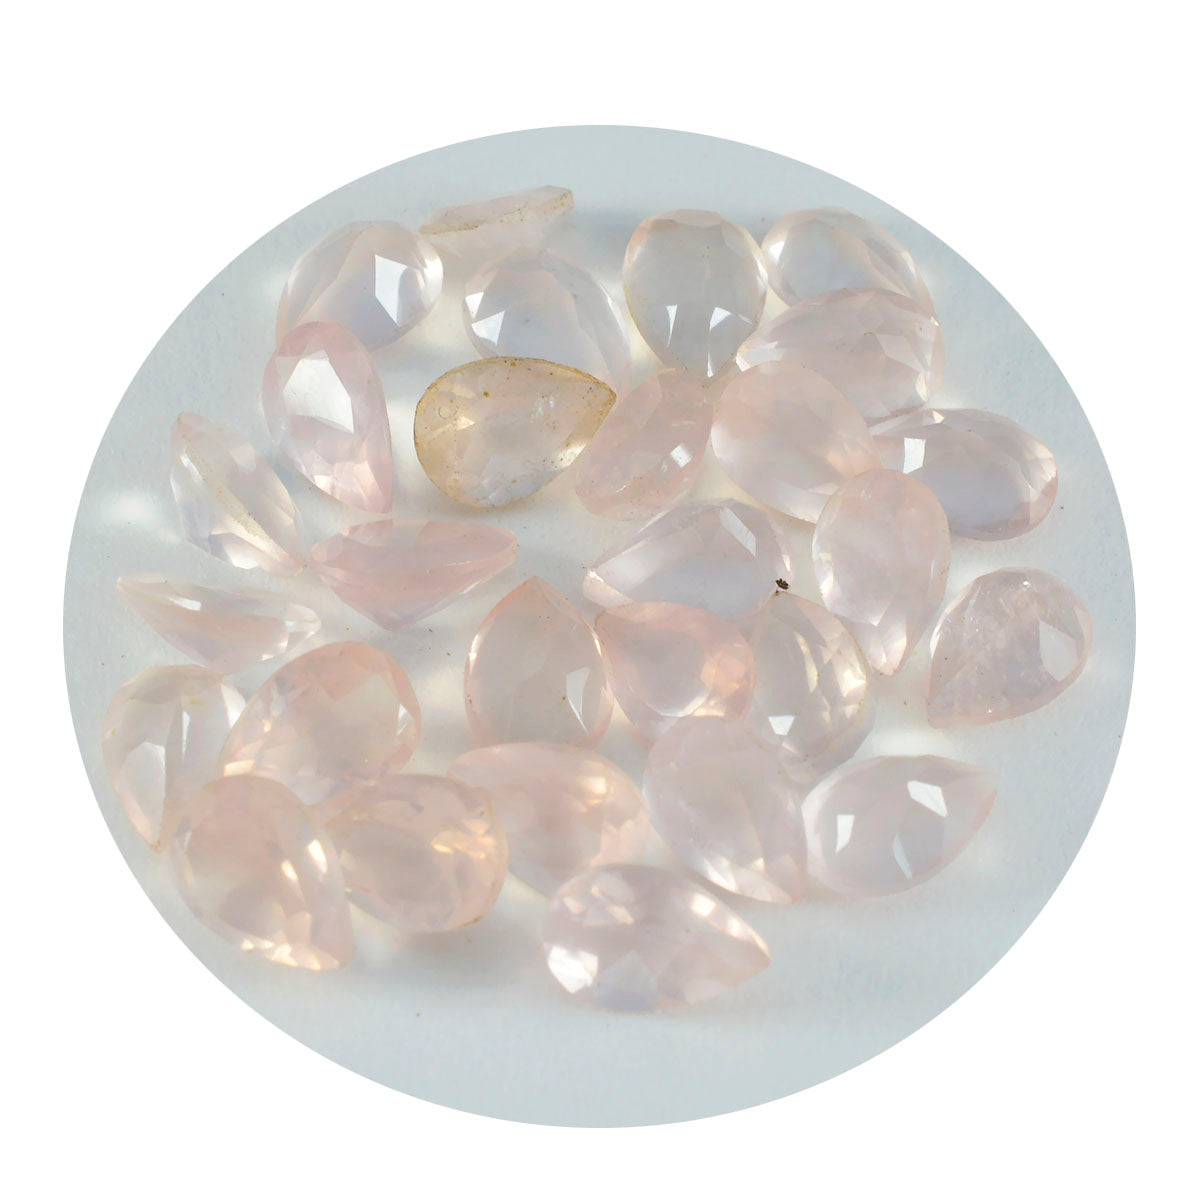 Riyogems 1PC Pink Rose Quartz Faceted 5x7 mm Pear Shape superb Quality Stone